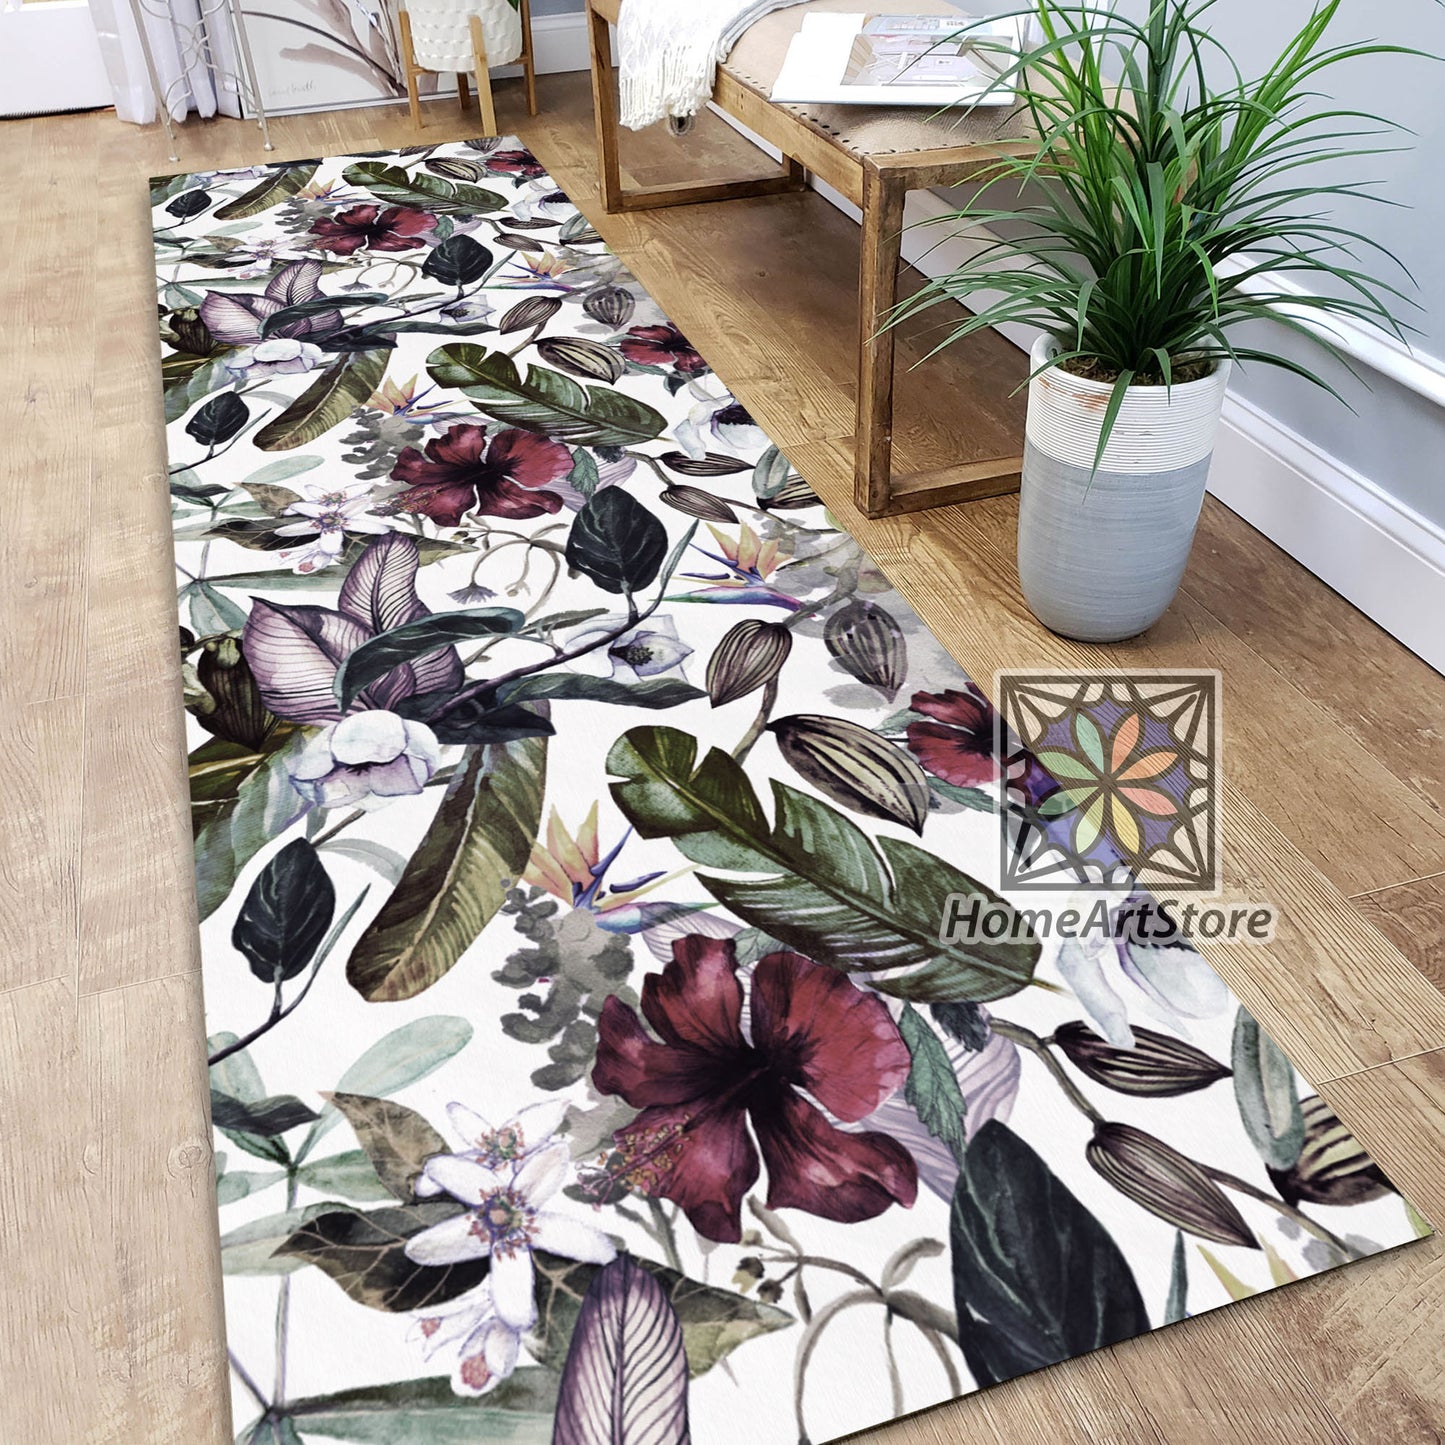 Magnolia Themed Runner Rug, Tropical Themed Kitchen Carpet, Boho Home Decor, Hawaii Hallway Runner Rug